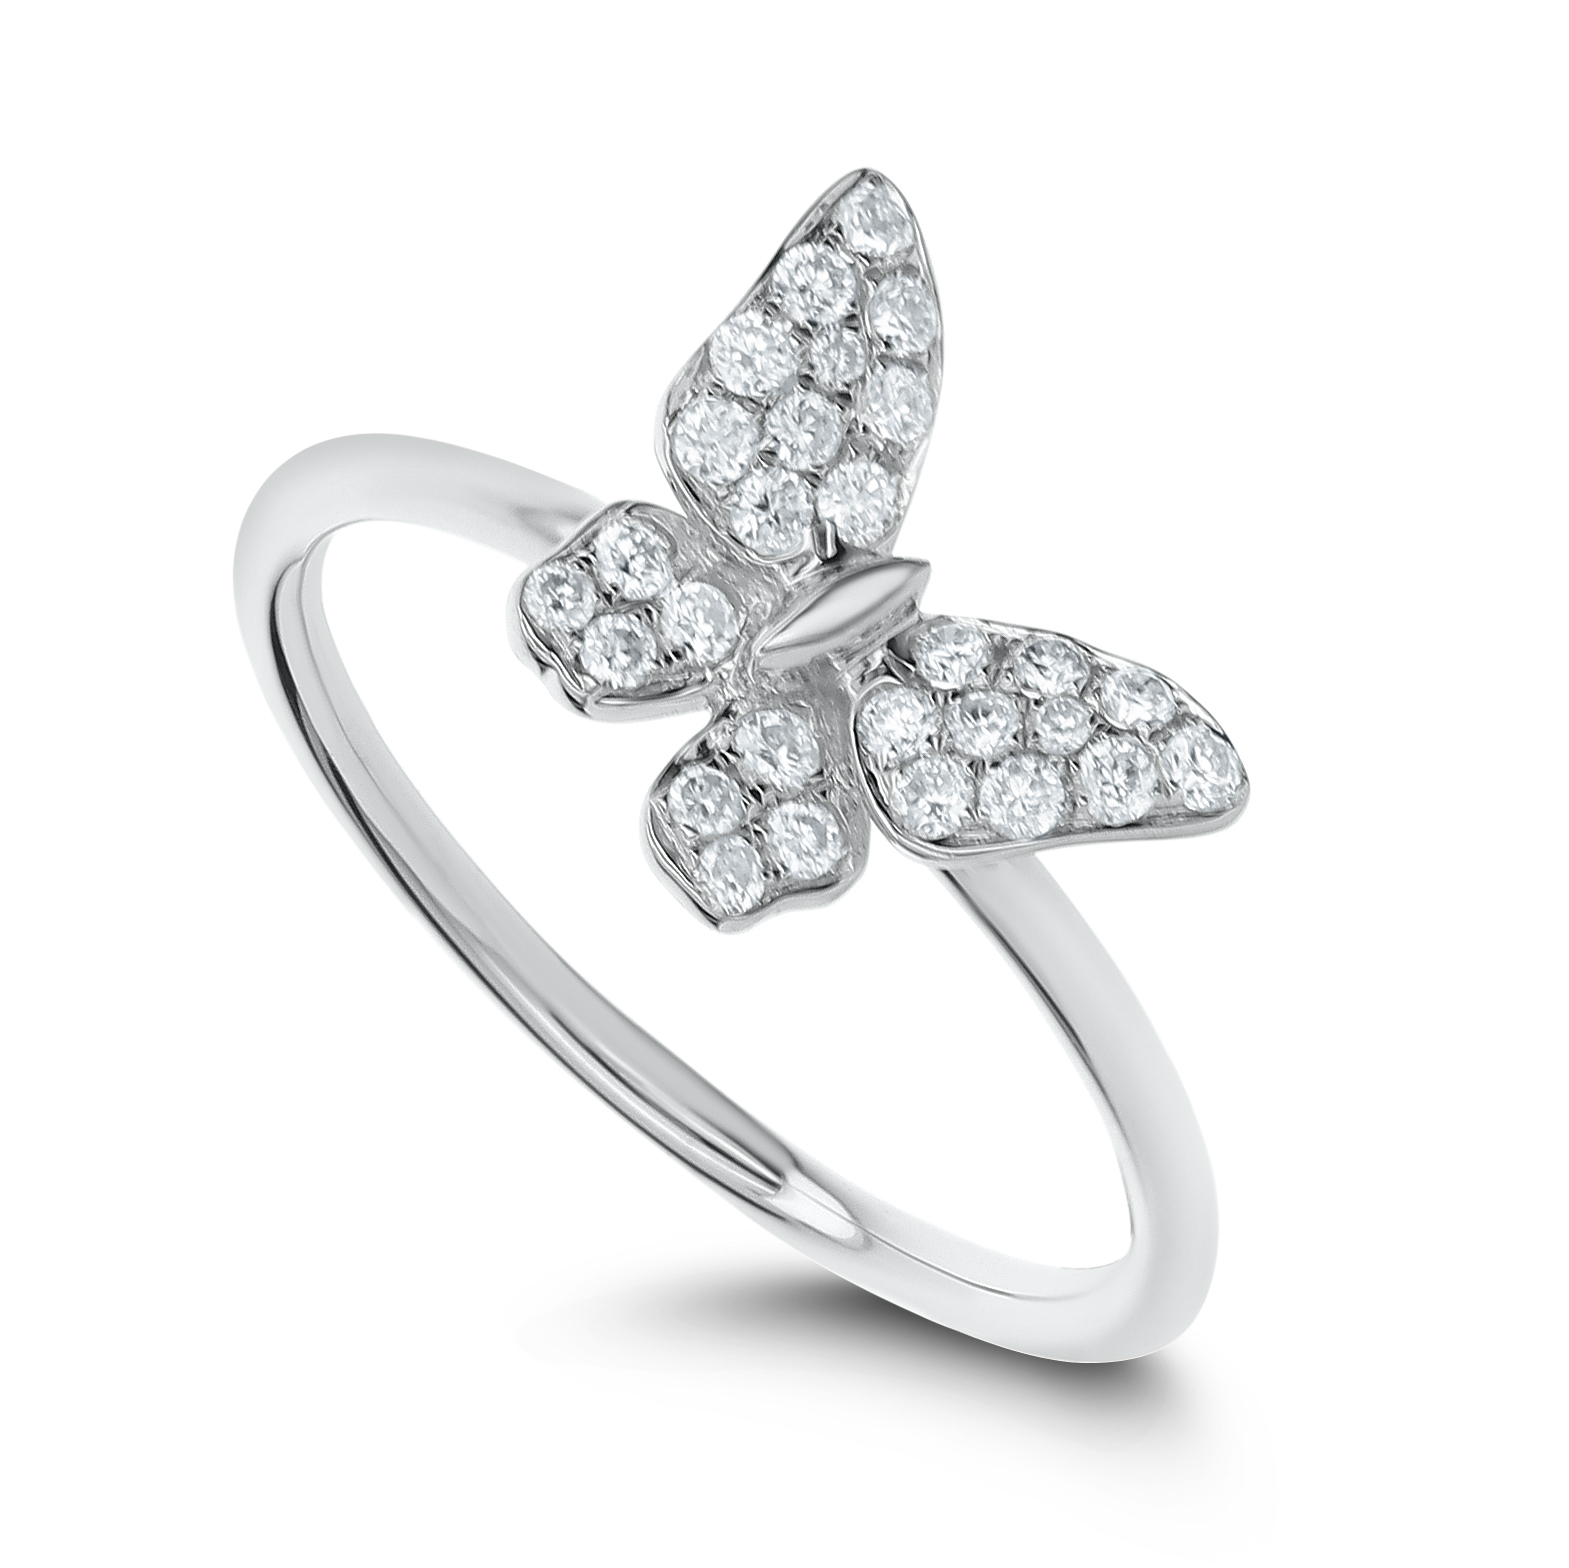 18k White Gold Diamond Butterfly Ring